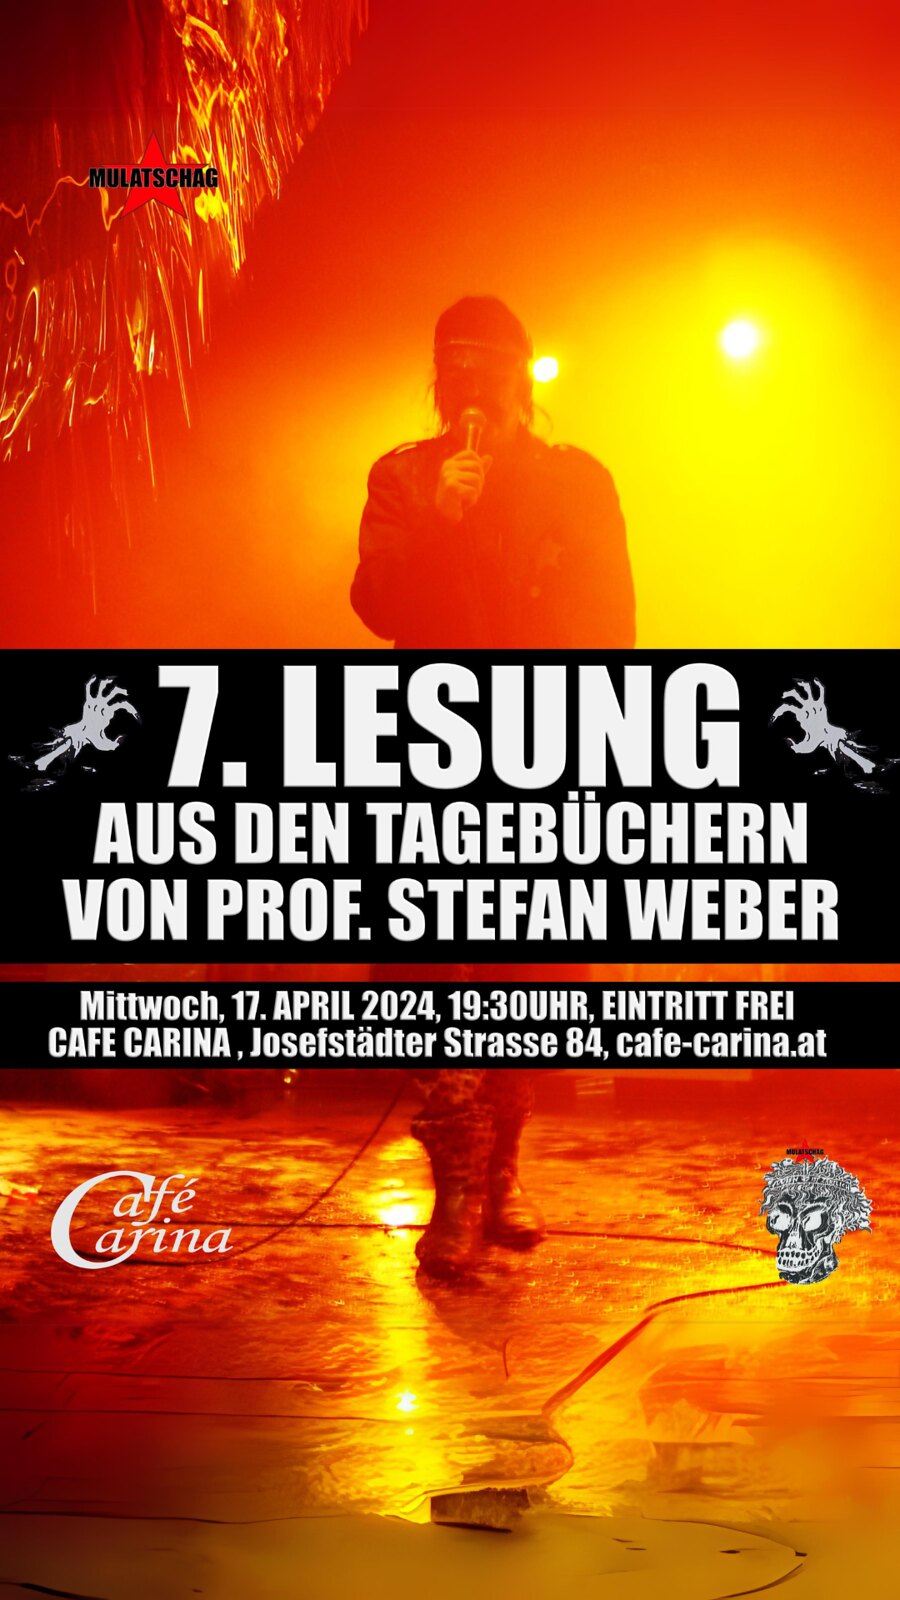 7. Lesung aus den Tagebüchern von Prof. Stefan Weber am 17. April 2024 @ Café Carina.